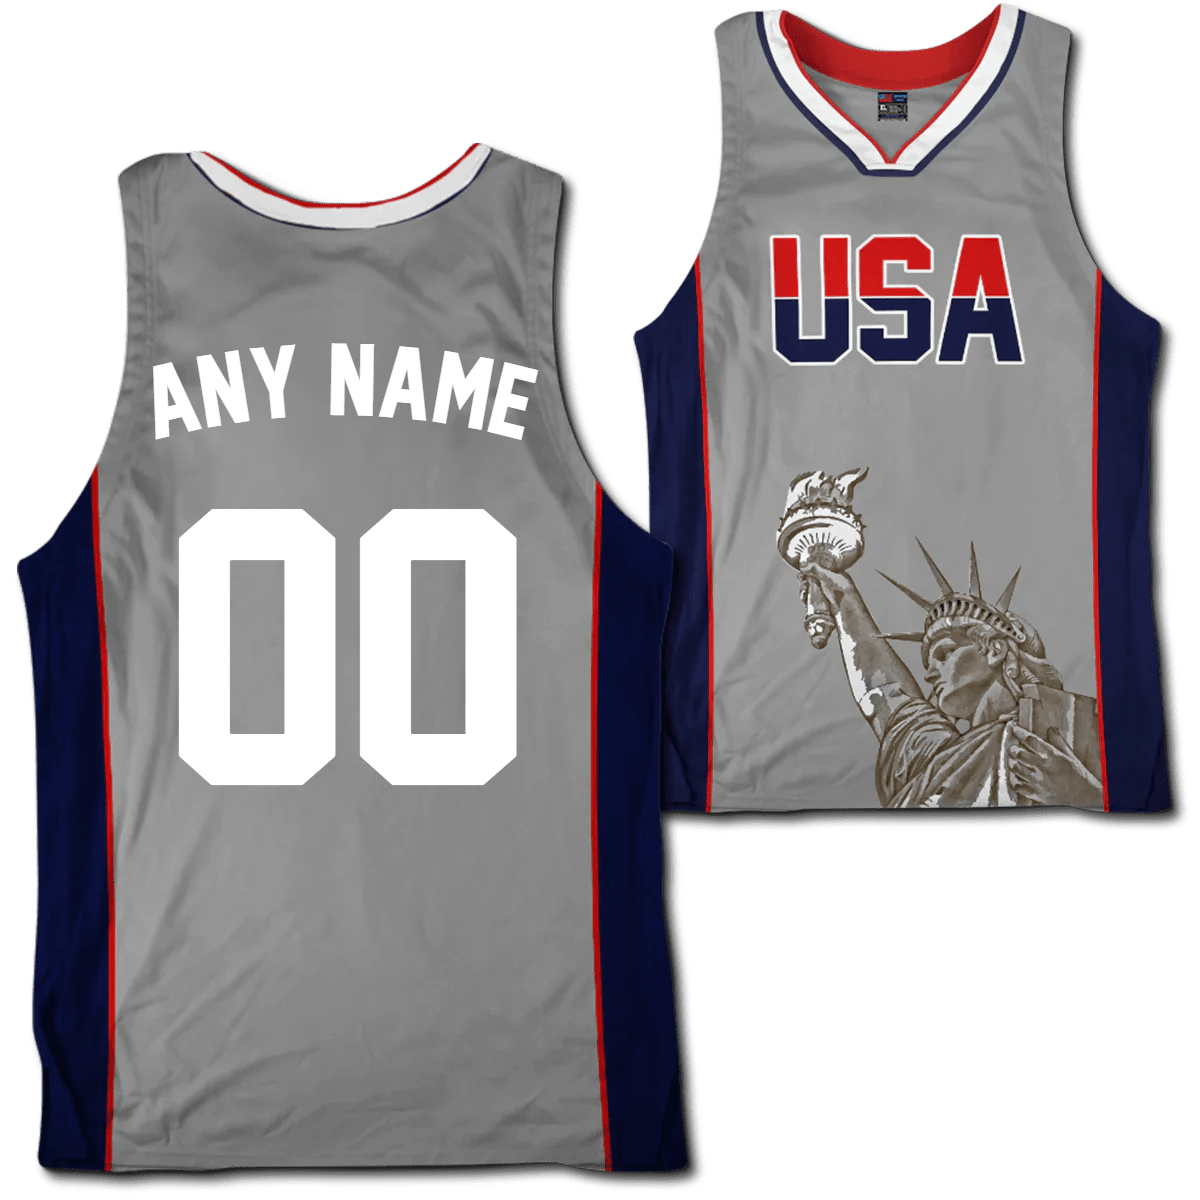 Thumbnail for Custom Grey USA Basketball Jersey - Greater Half